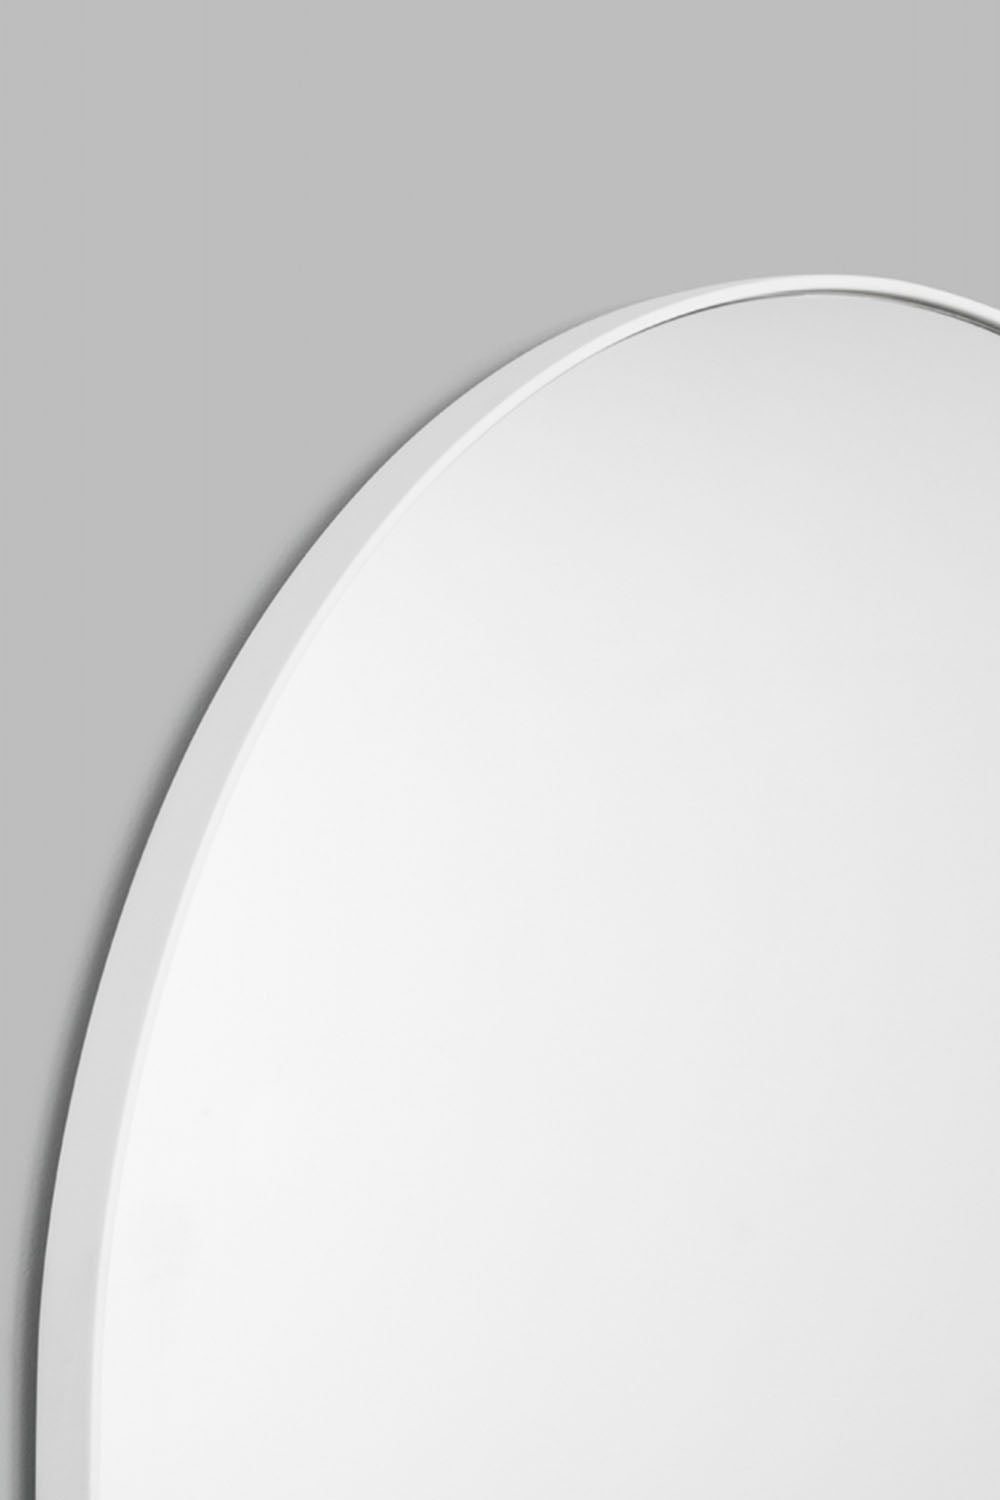 Bjorn Arch Mirror - White